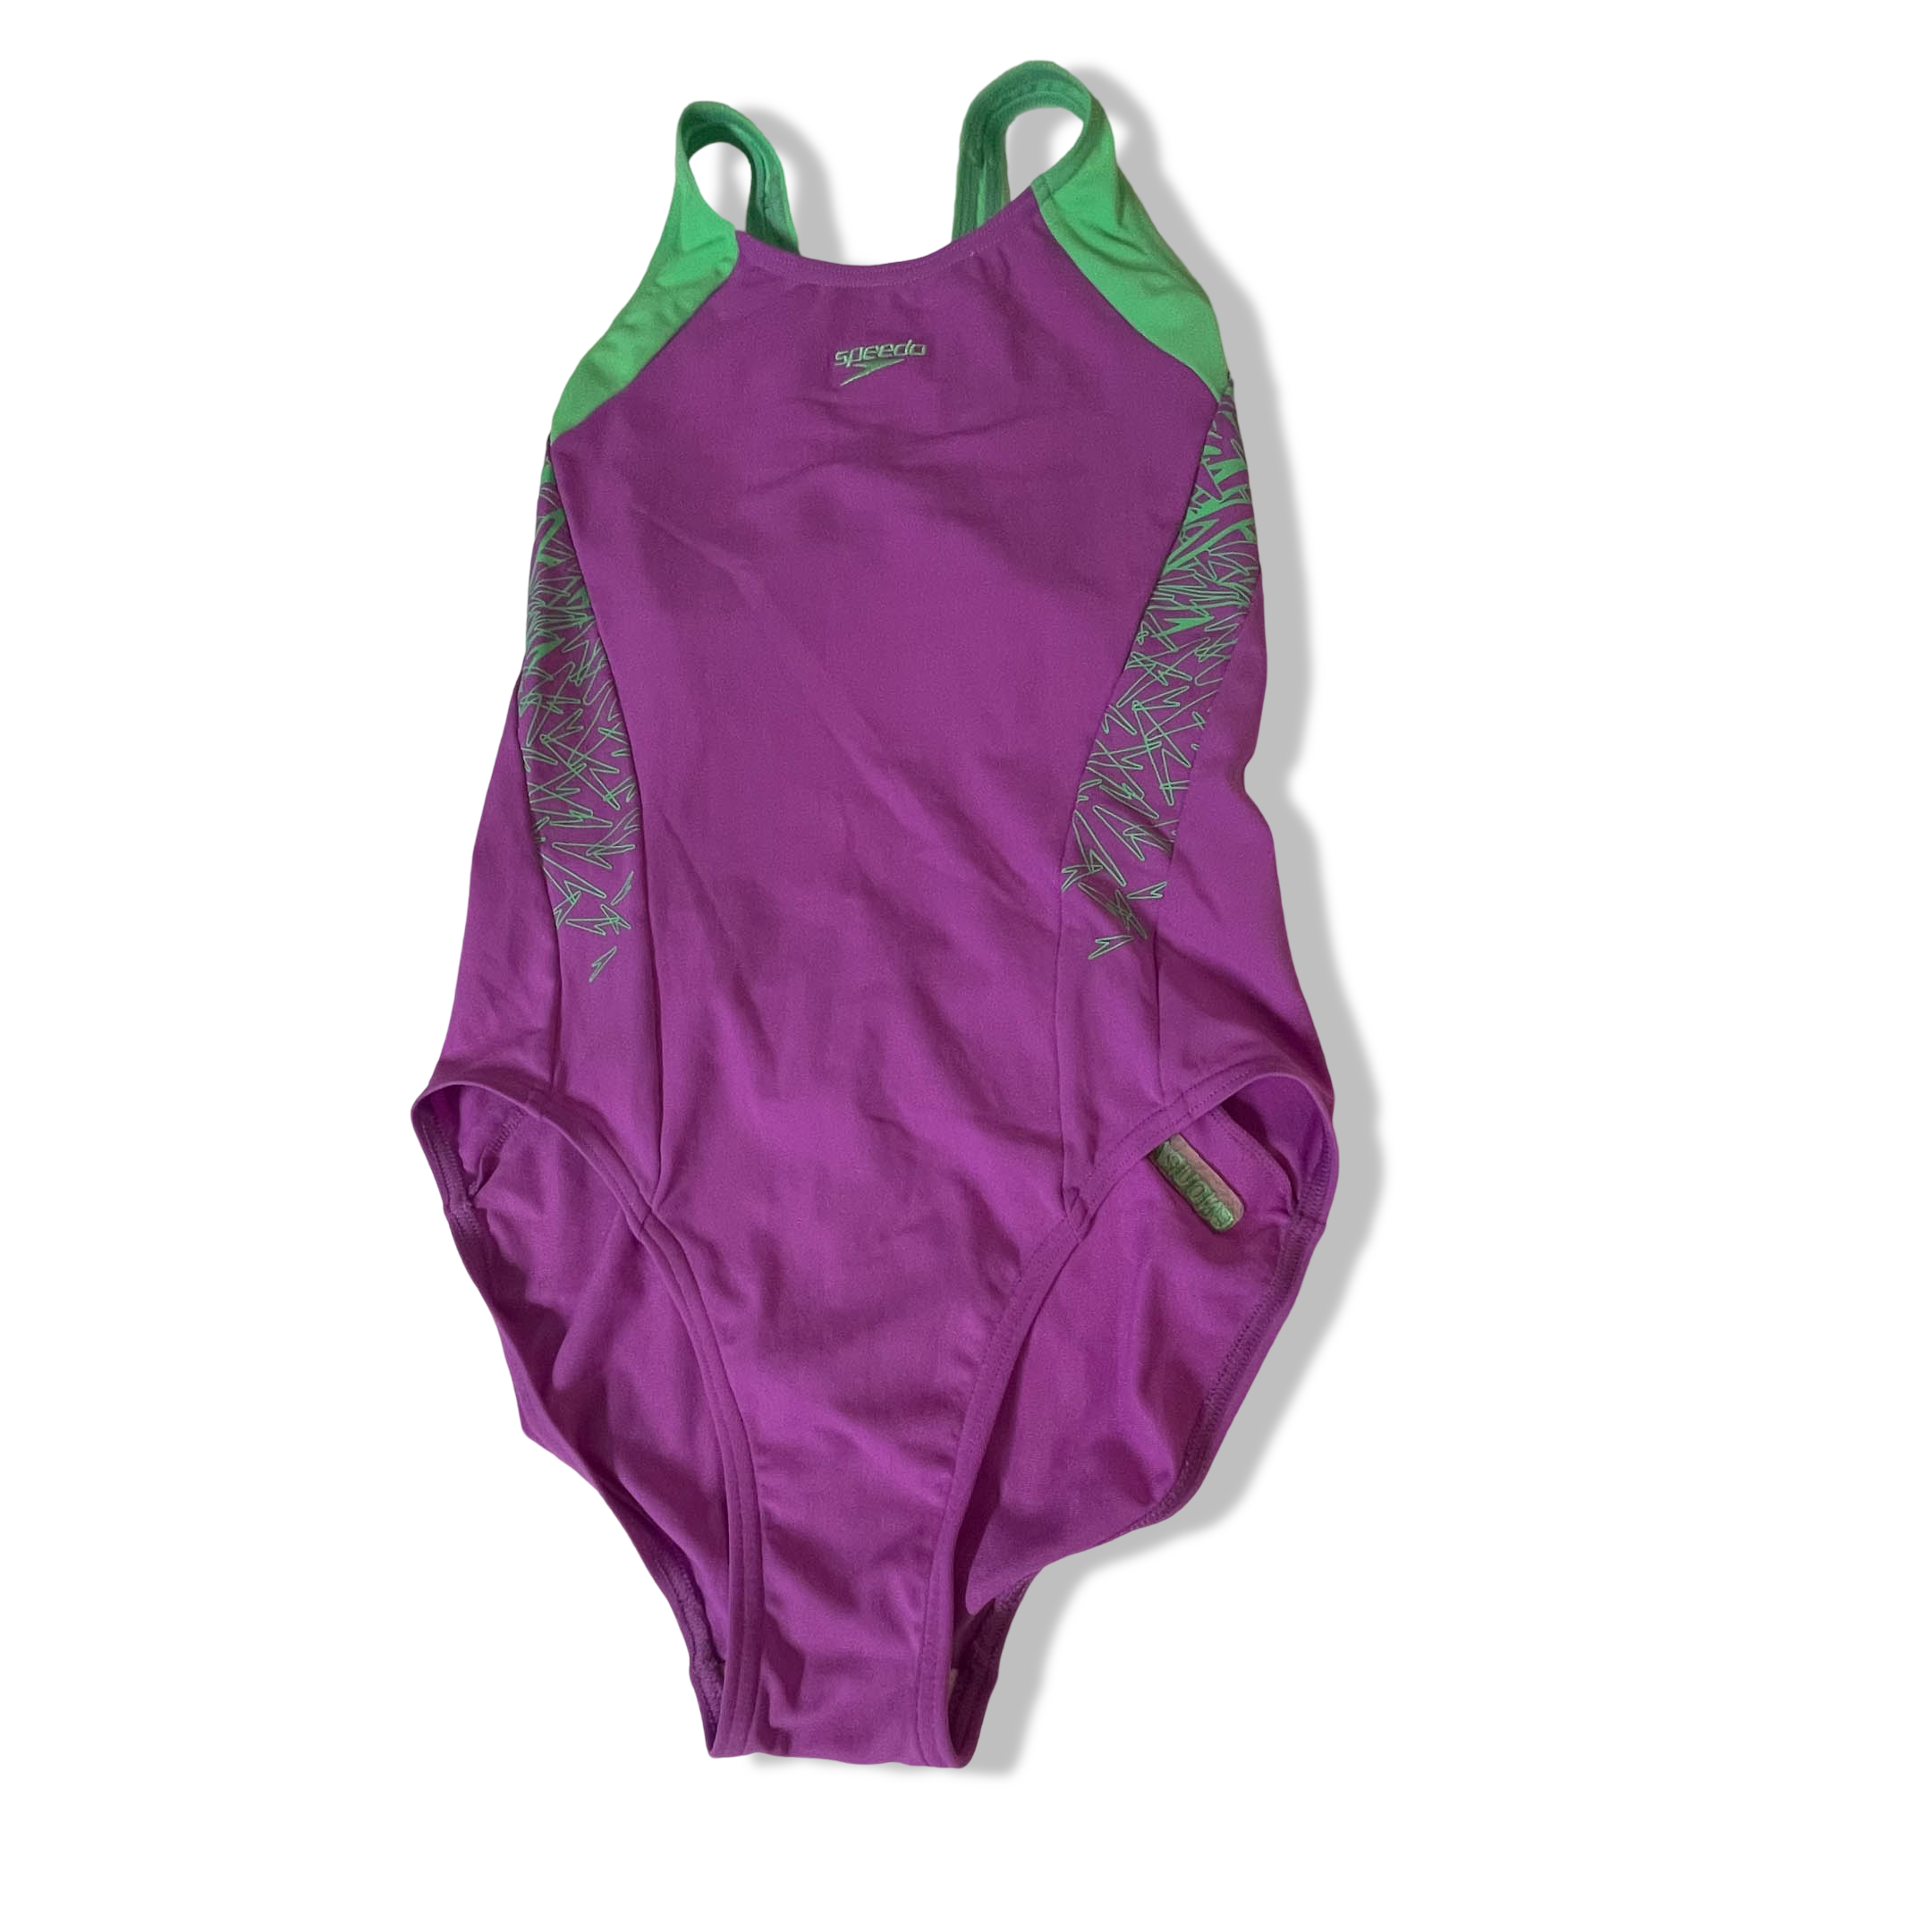 Vintage Speedo Revolve purple Swim Suit Girls Size XS| L 20 W 11| SKU 3801<br>